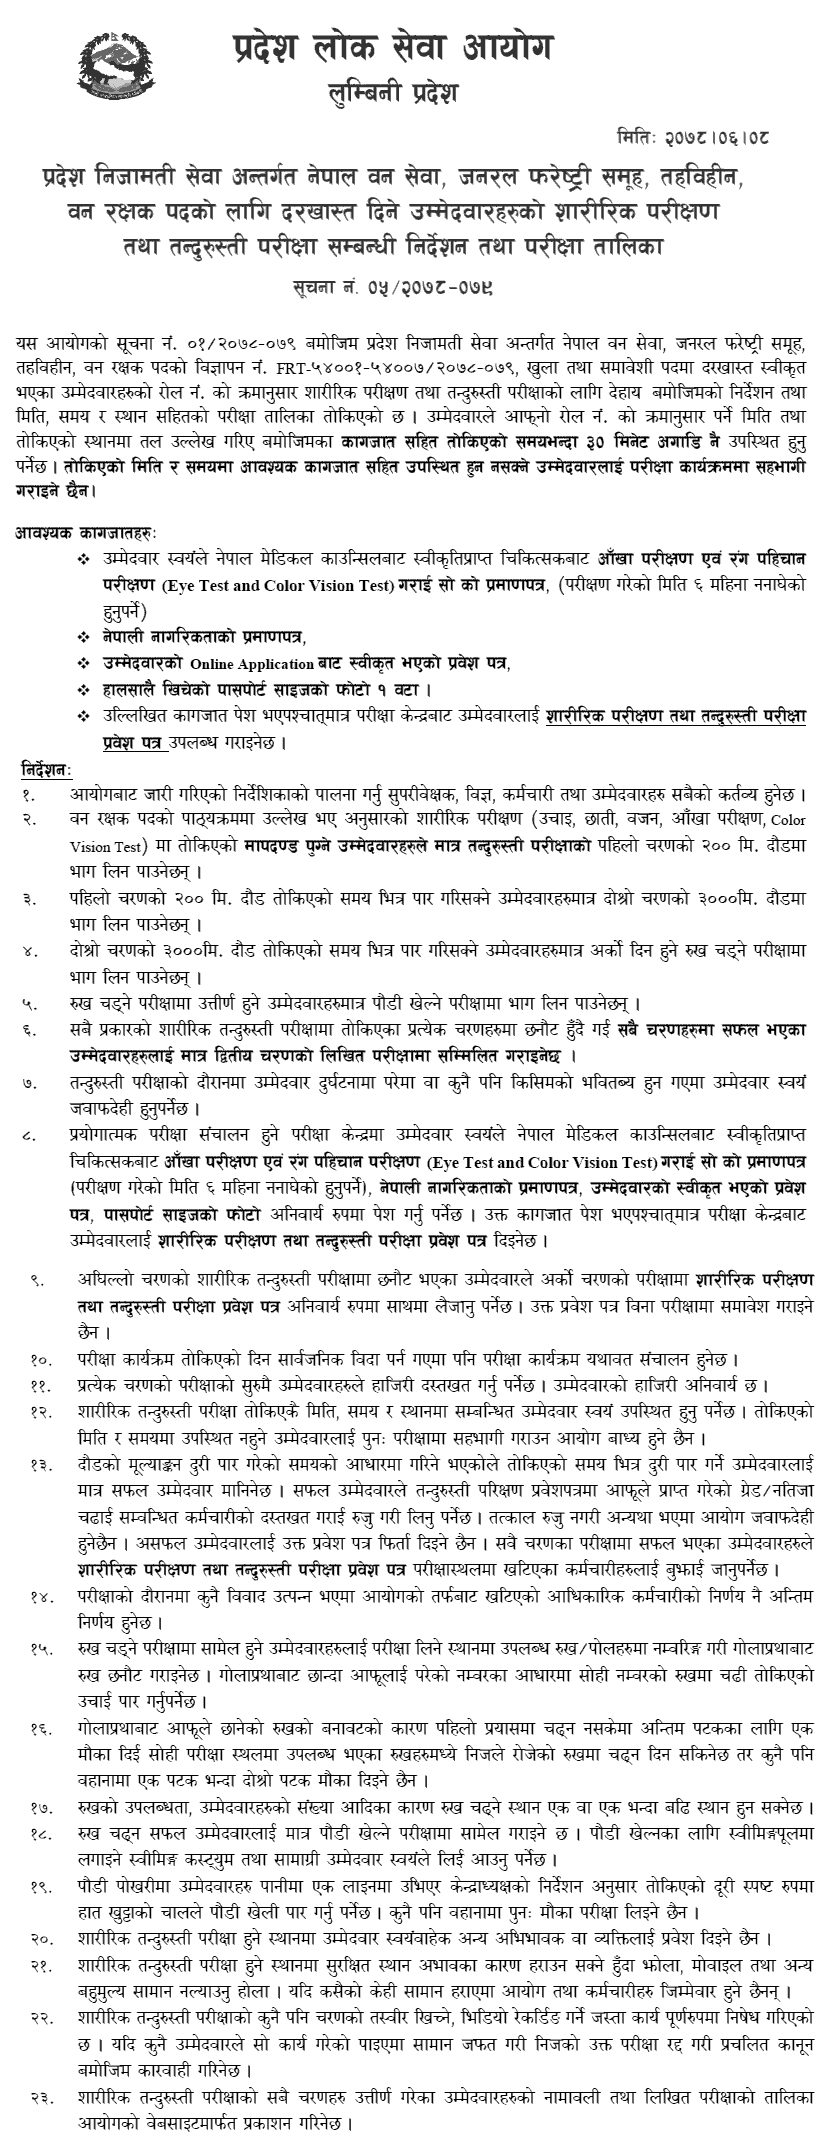 Lumbini Pradesh Lok Sewa Aayog Ban Rakshak Physical Test and Fitness Examination Schedule and Center